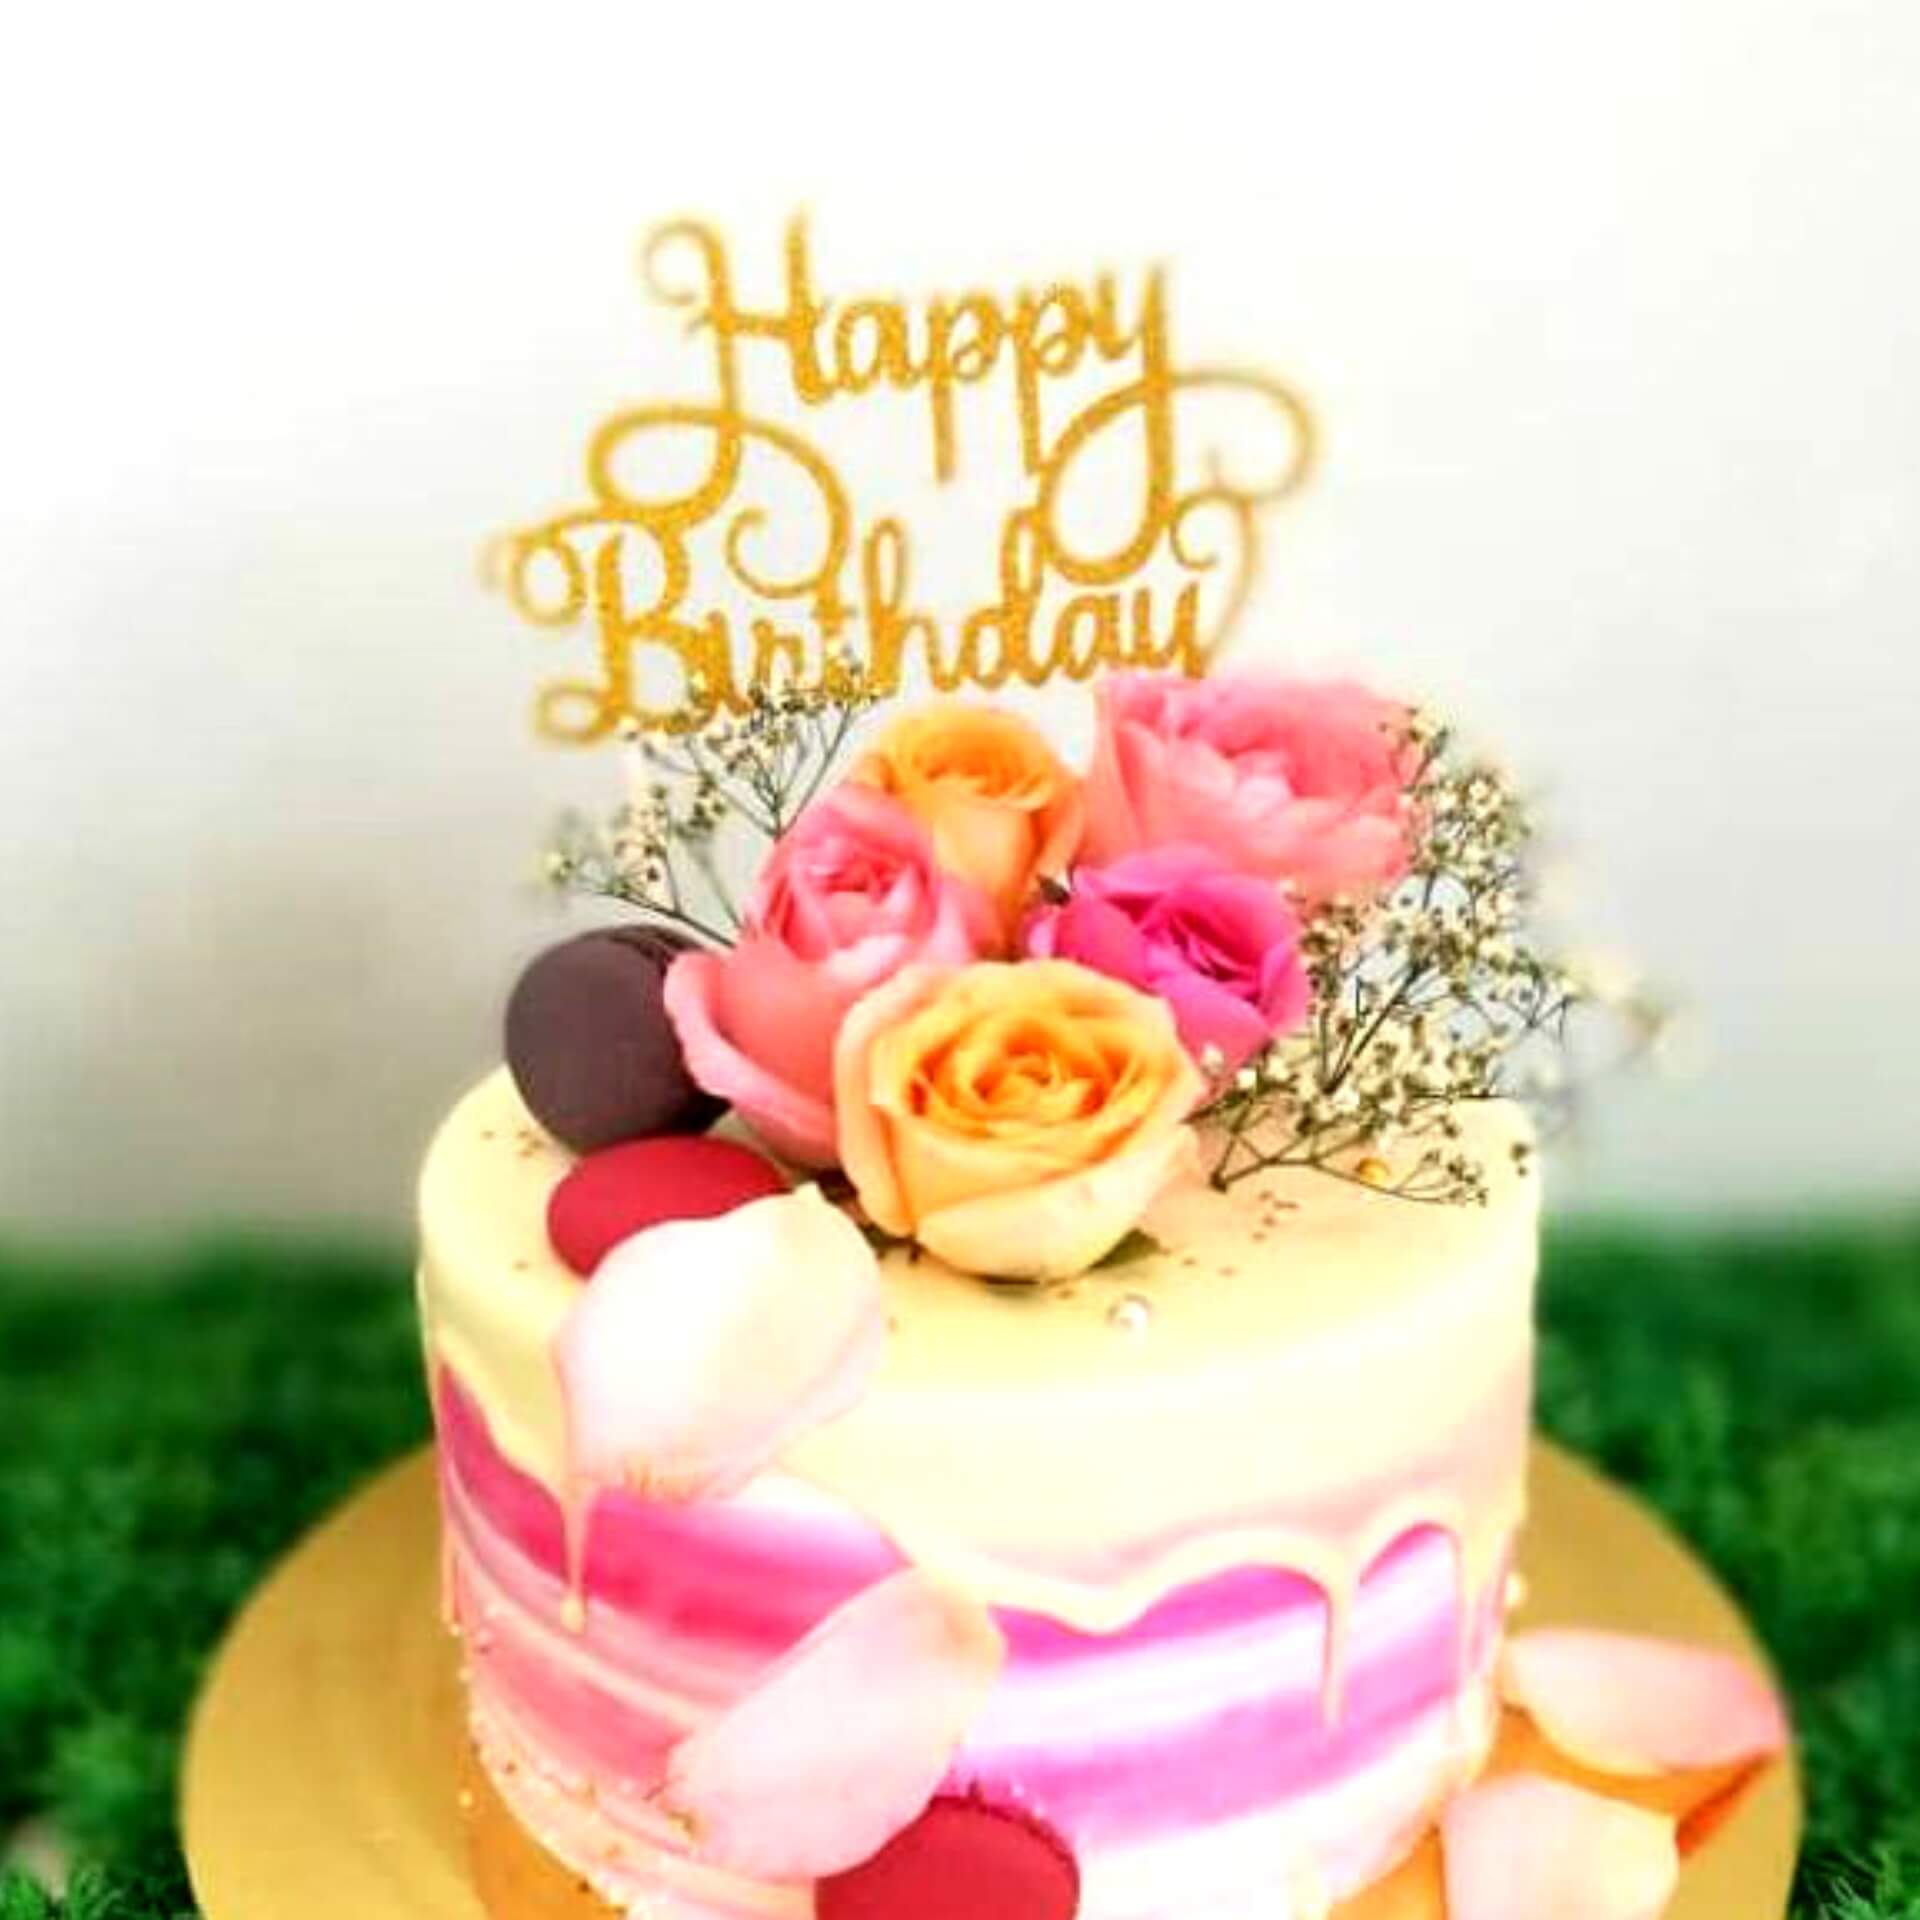 202+ Cake Happy Birthday Wallpaper Photos Free Download